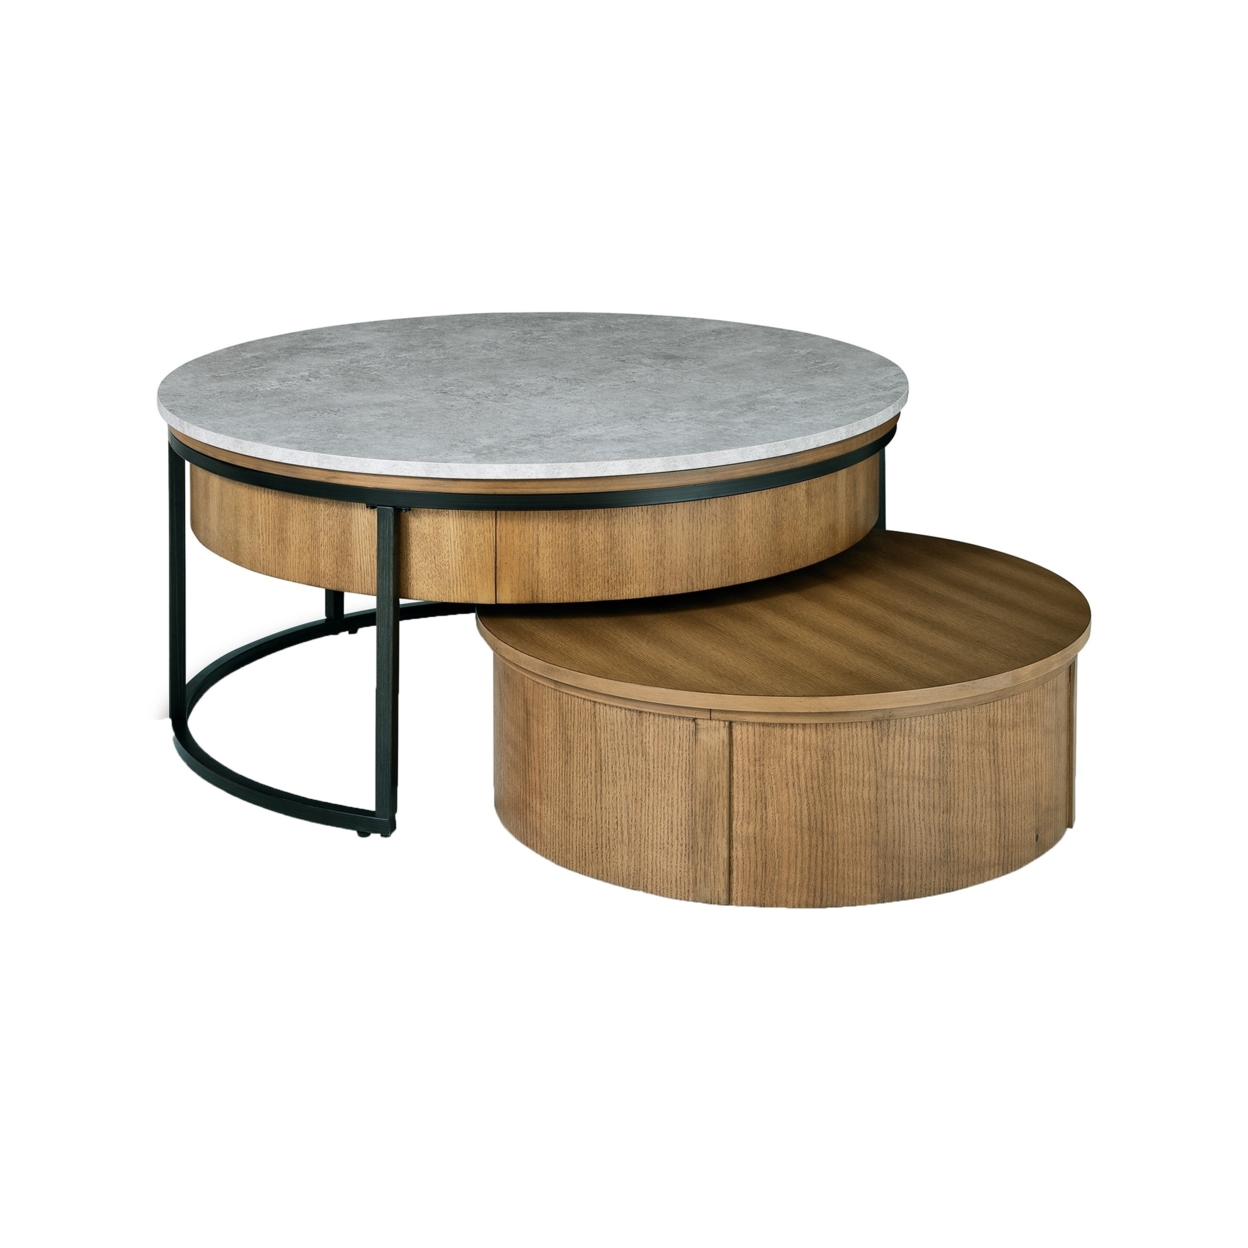 36 Inch 2 Piece Round Nesting Coffee Table, Lift Top Storage, Wheels, Brown- Saltoro Sherpi